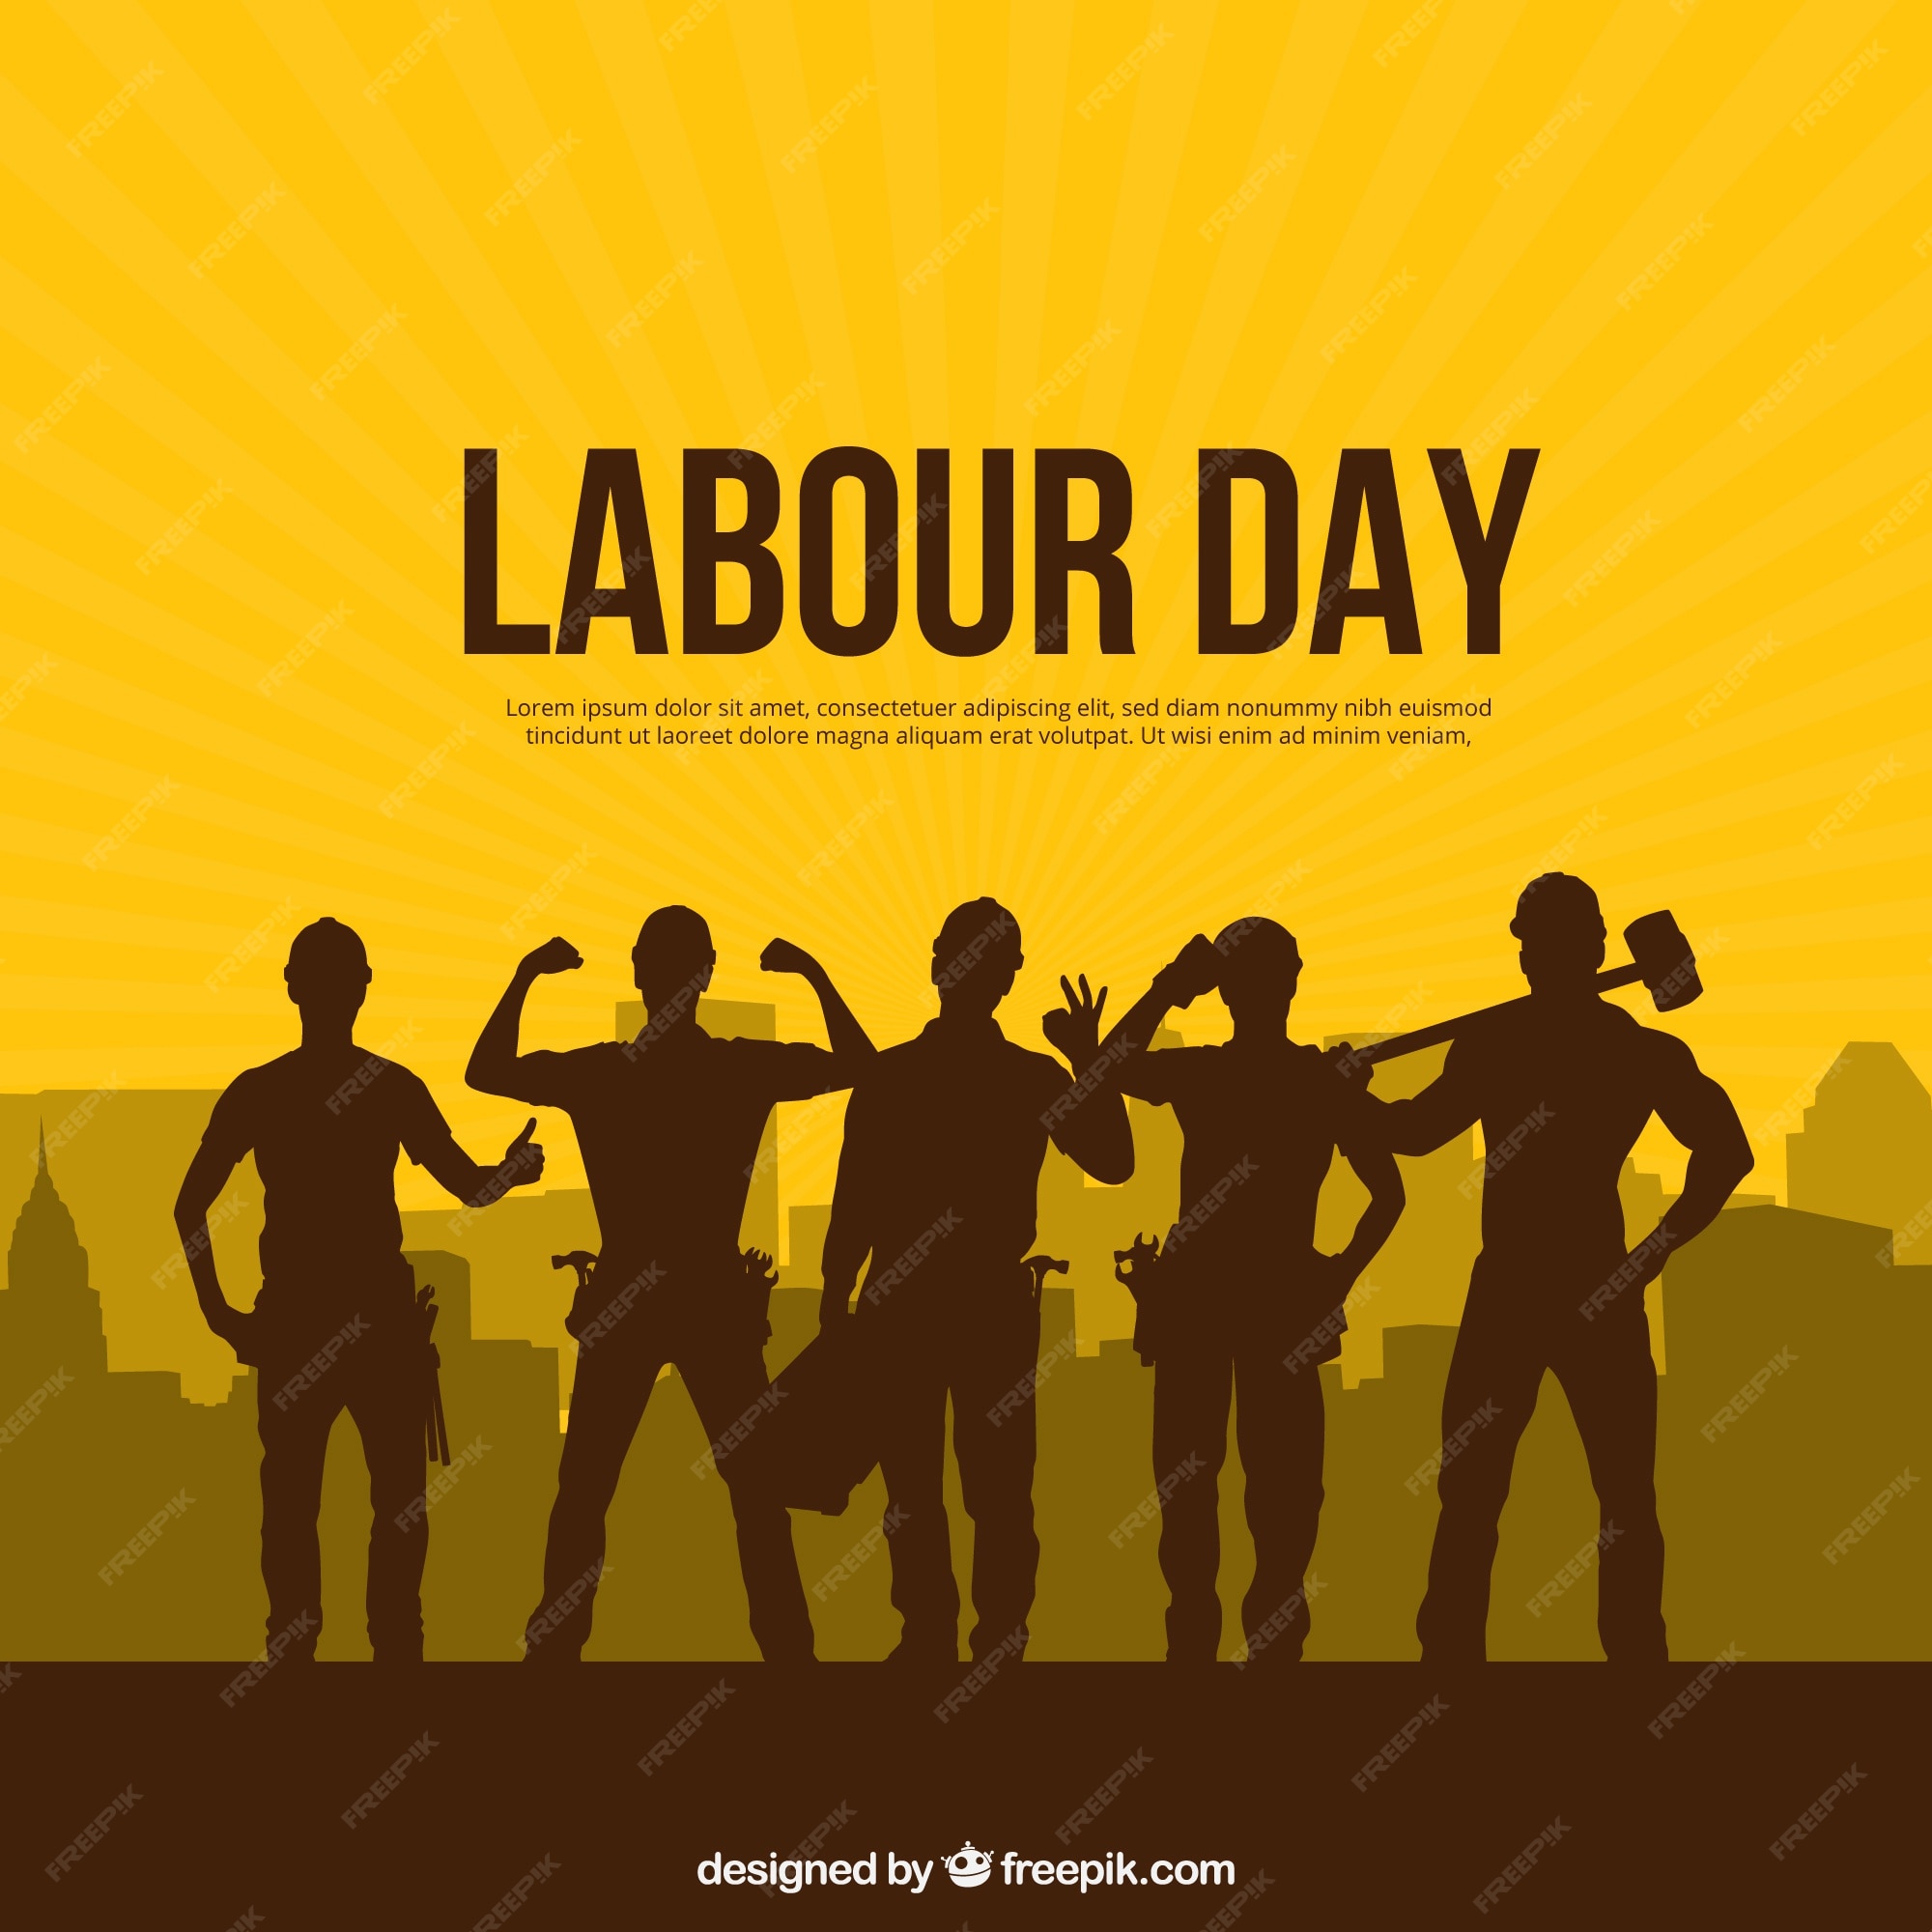 Labour day Vectors & Illustrations for Free Download | Freepik